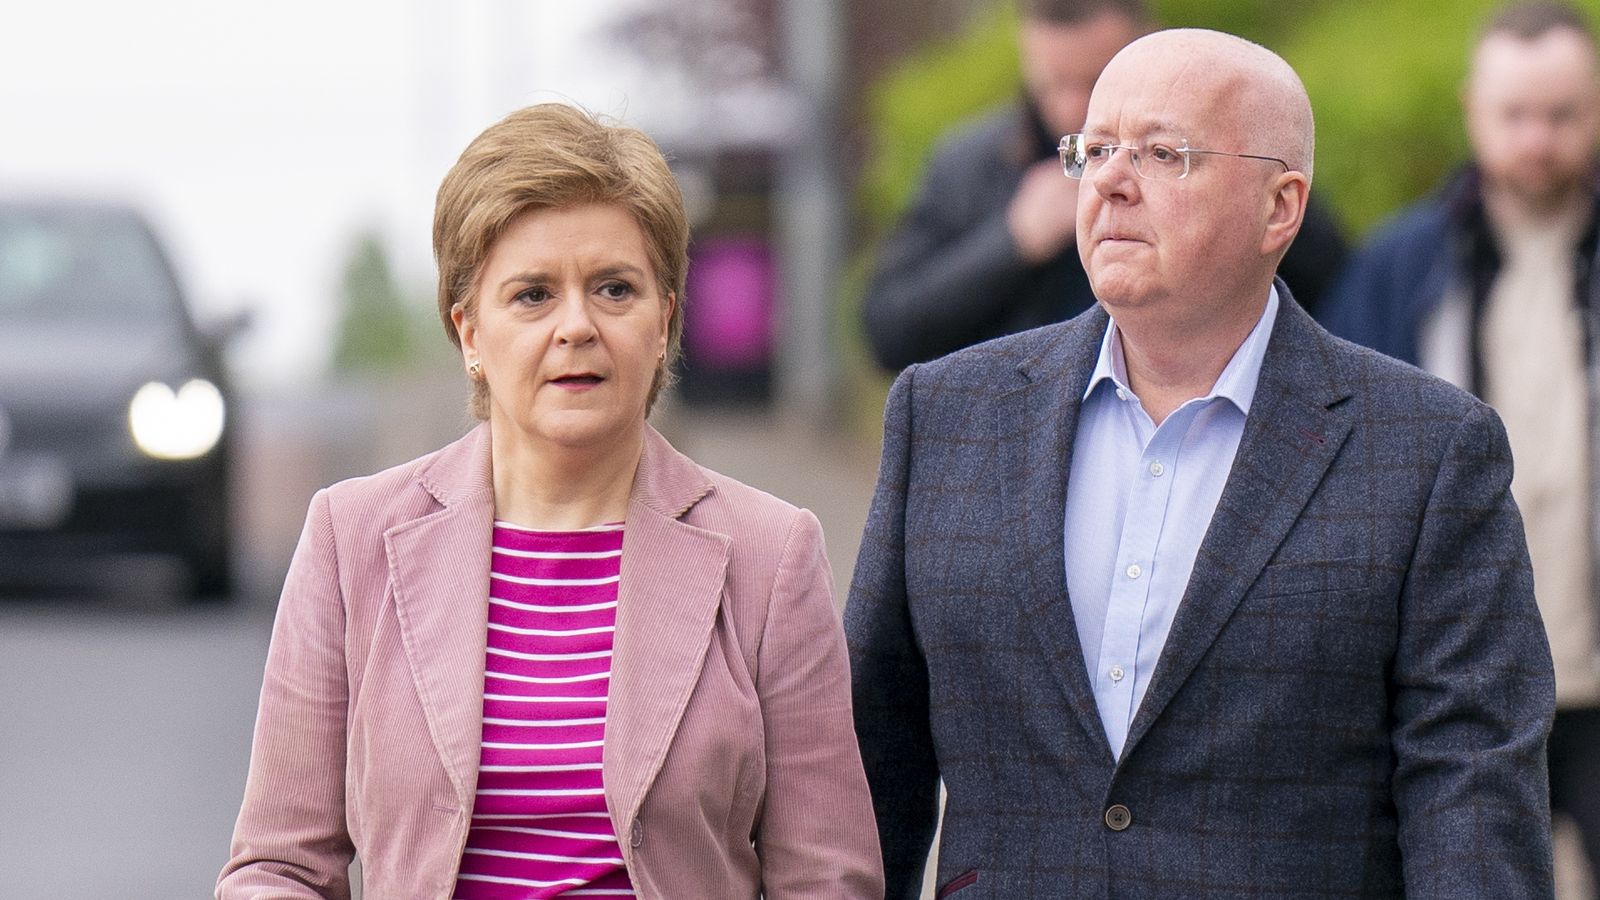 SNP leadership contender Ash Regan says ‘conflict of interest’ over Nicola Sturgeon’s husband in contest | Politics News